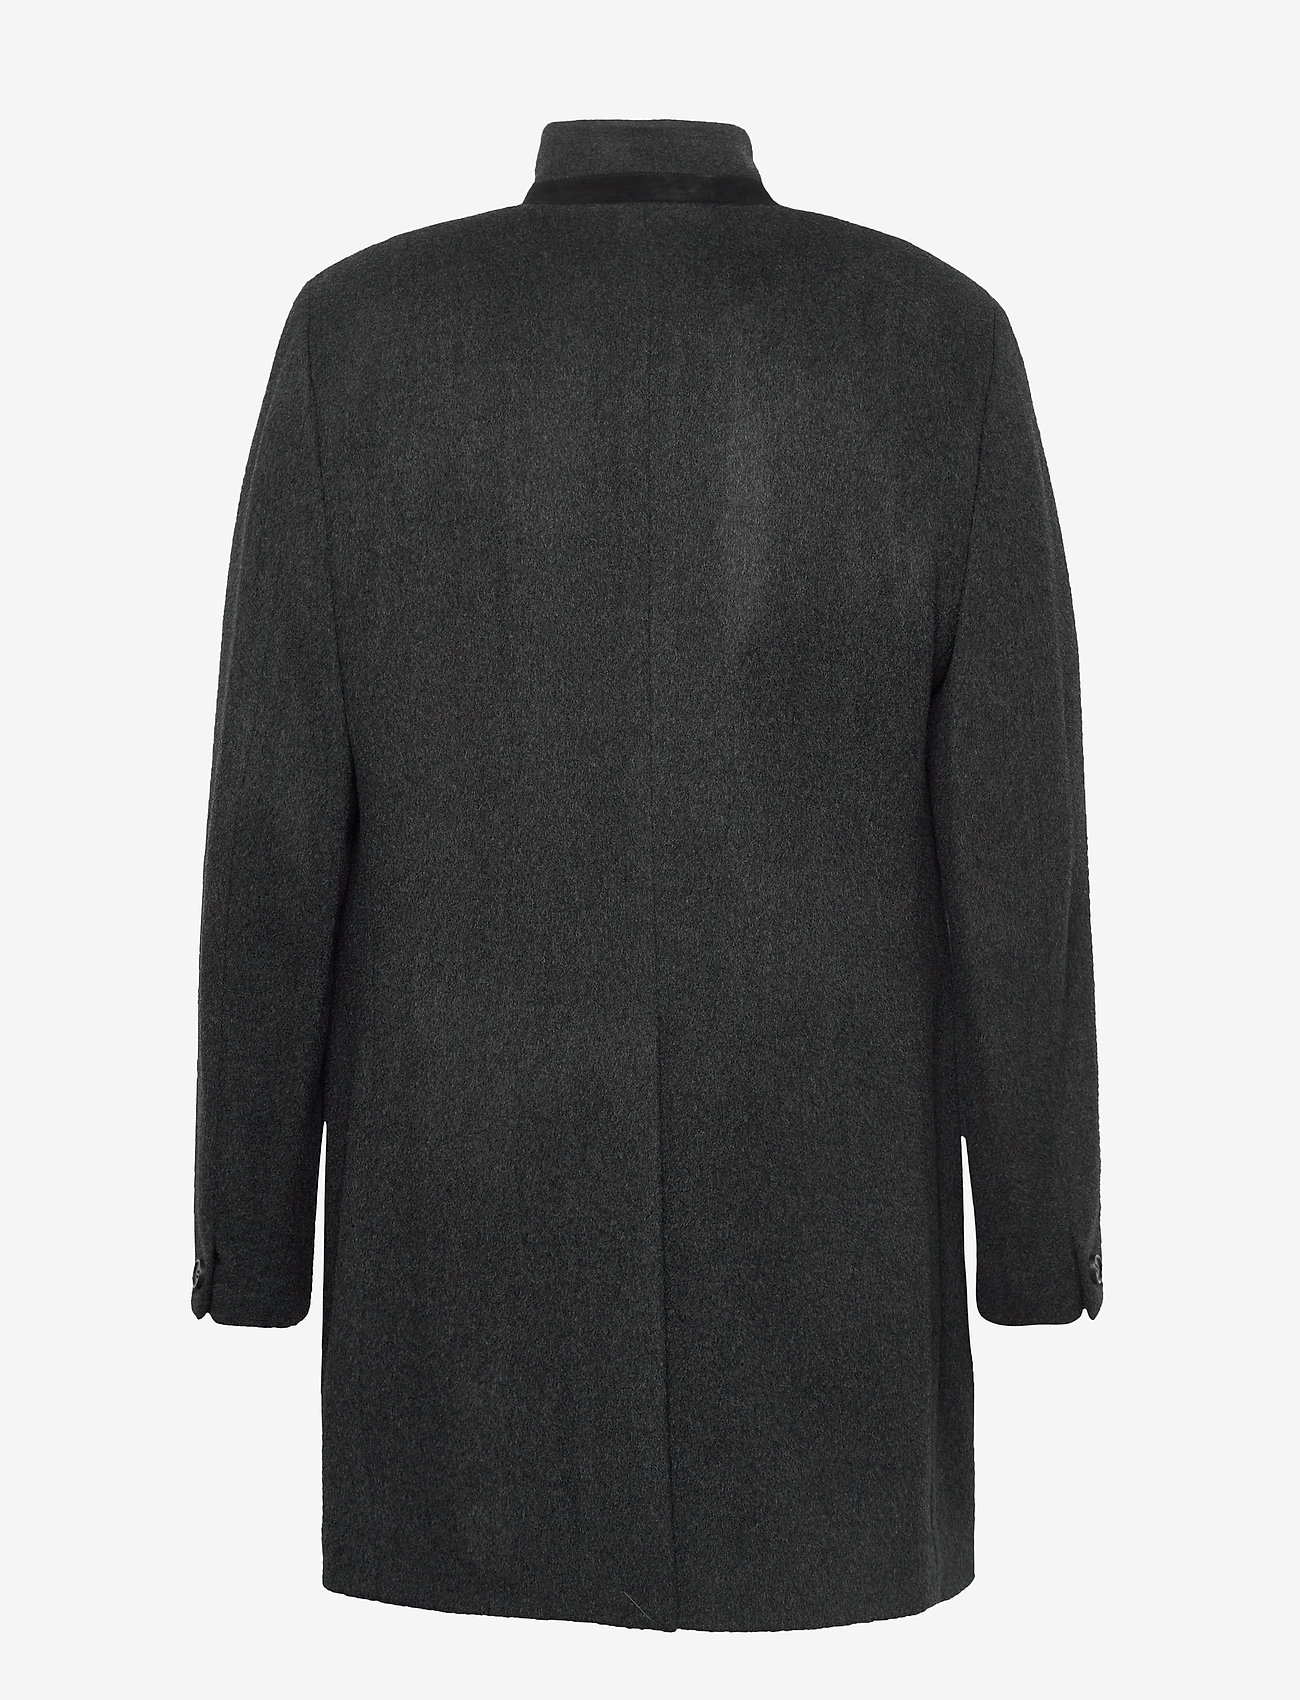 AllSaints - MANOR COAT - winter jackets - charcoal grey - 1